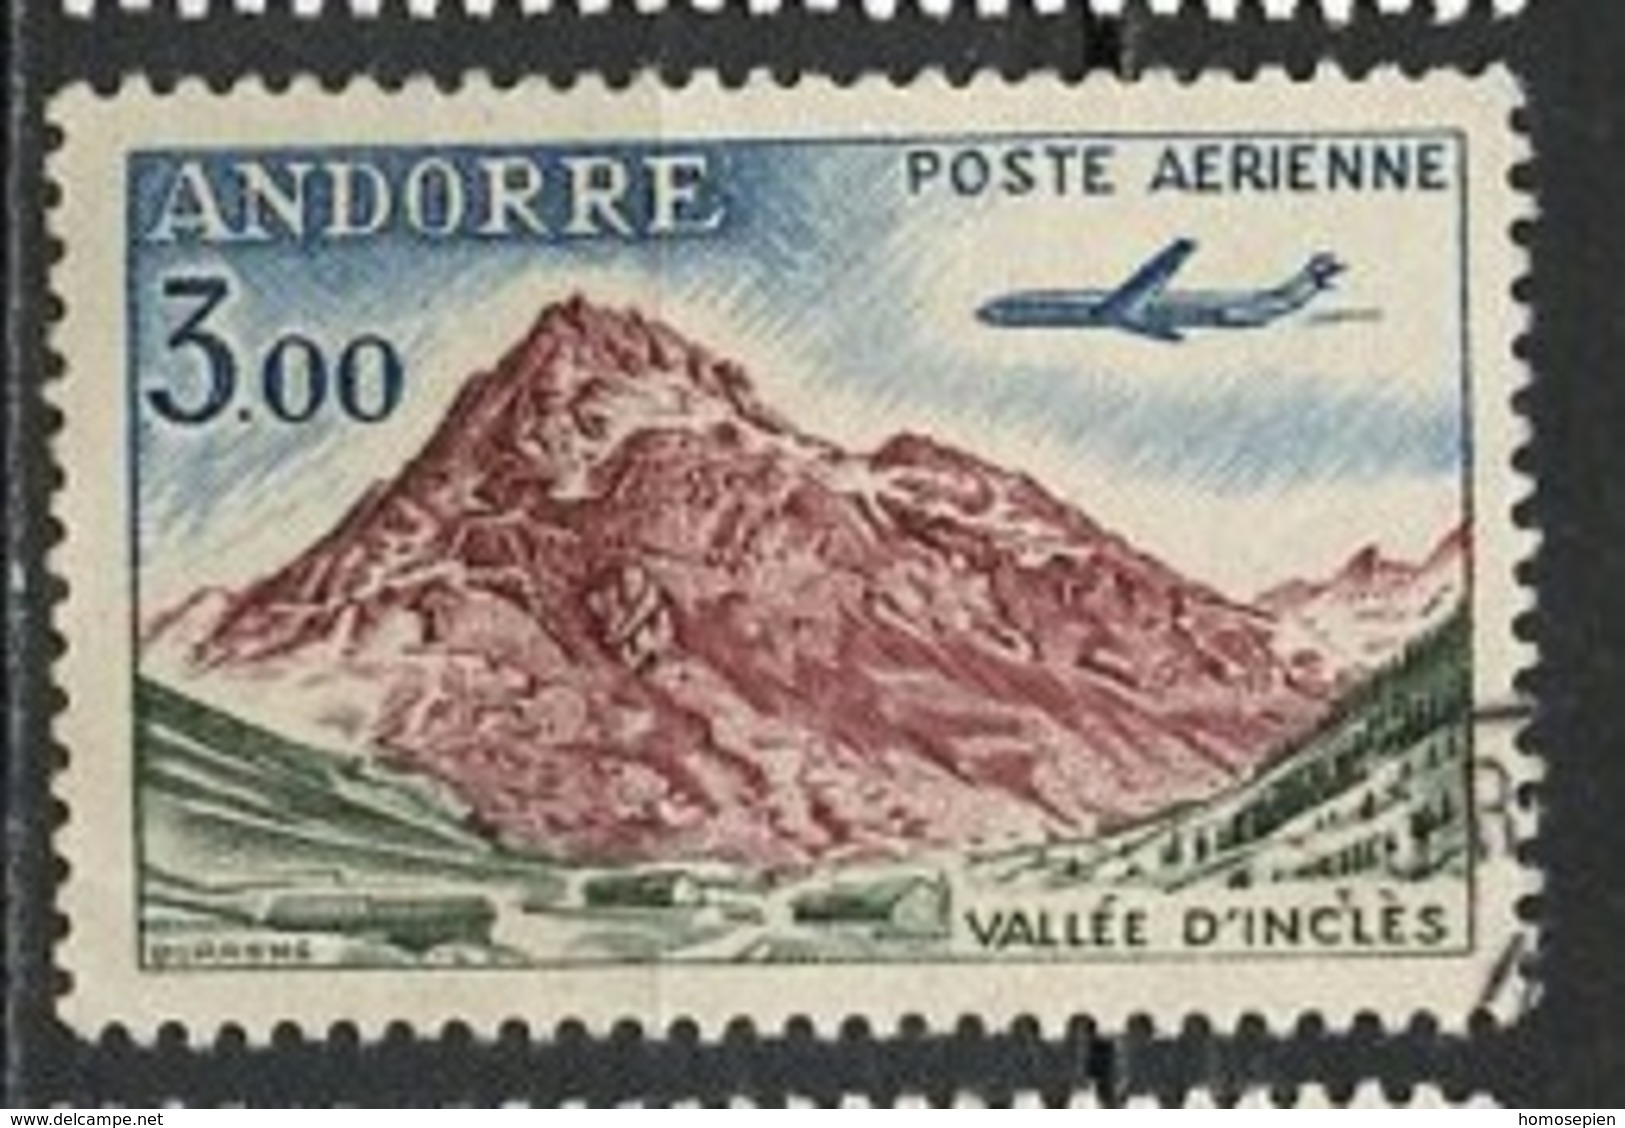 Andorre Français - Andorra Poste Aérienne 1961-64 Y&T N°PA6 - Michel N°F176 (o) - 3f Vallée D'Inclès - Airmail